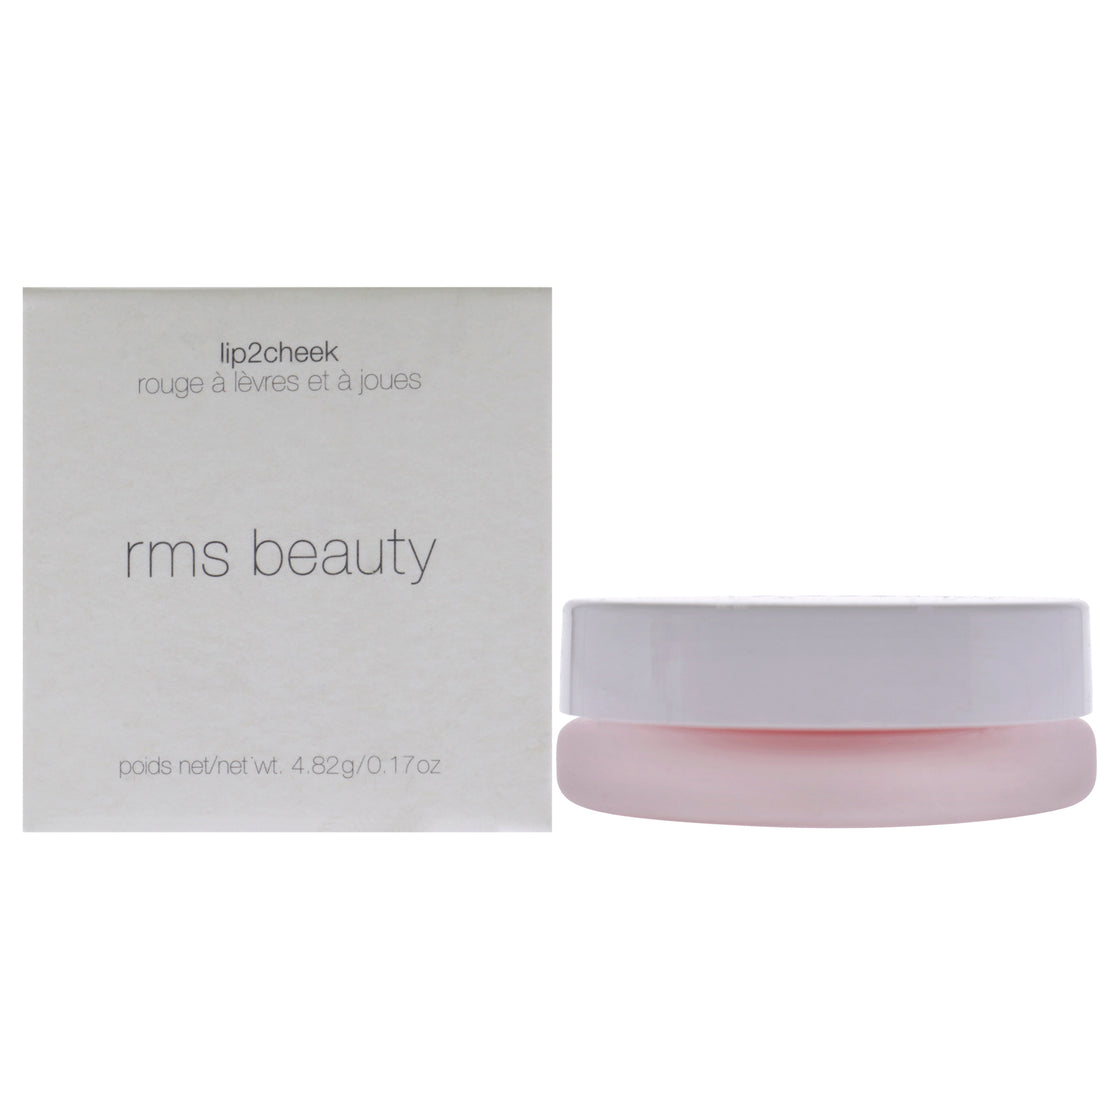 Lip2Cheek - Modest by RMS Beauty for Women - 0.17 oz Makeup